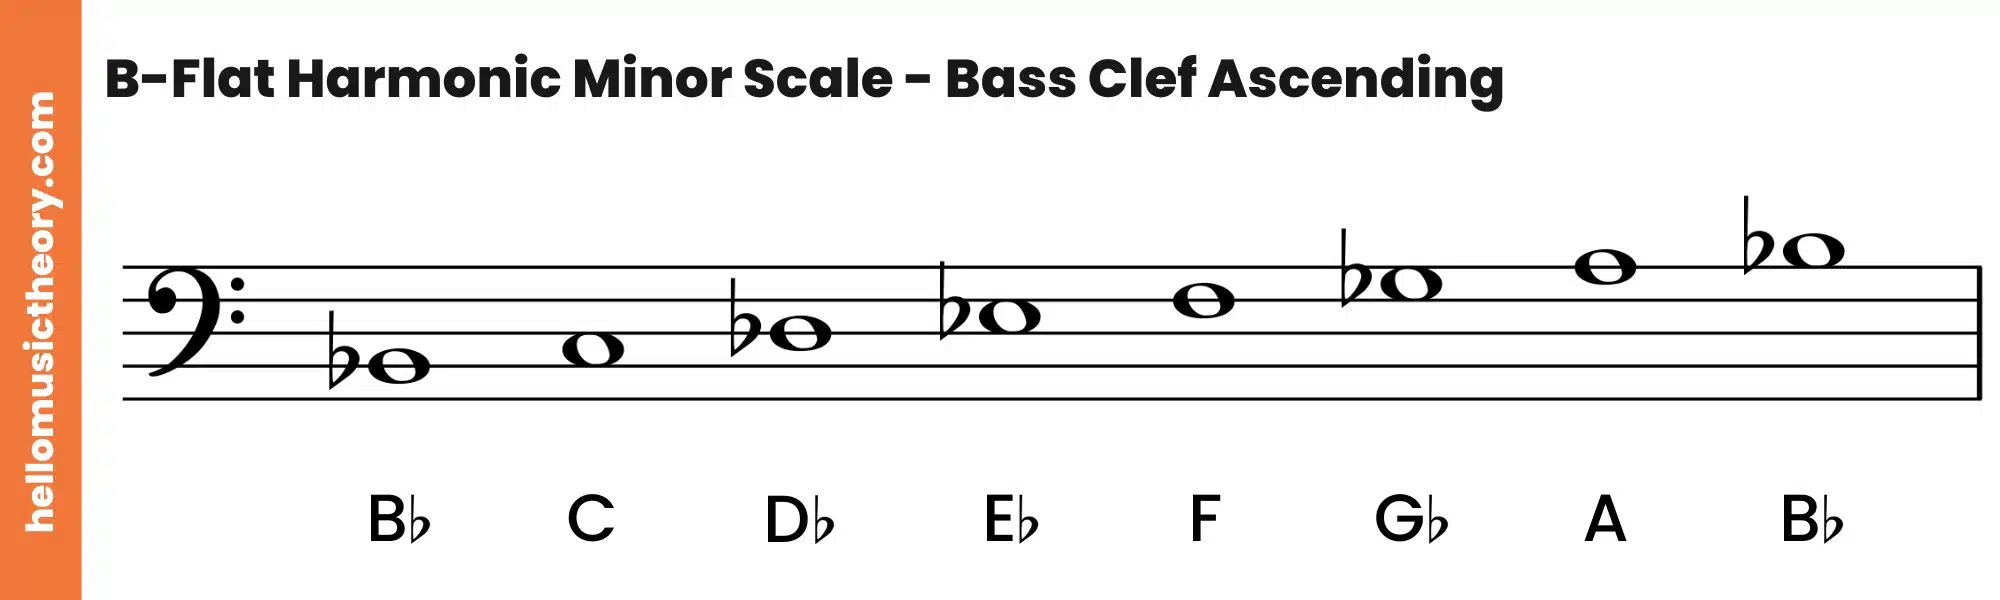 B-Flat Harmonic Minor Scale Bass Clef Ascending